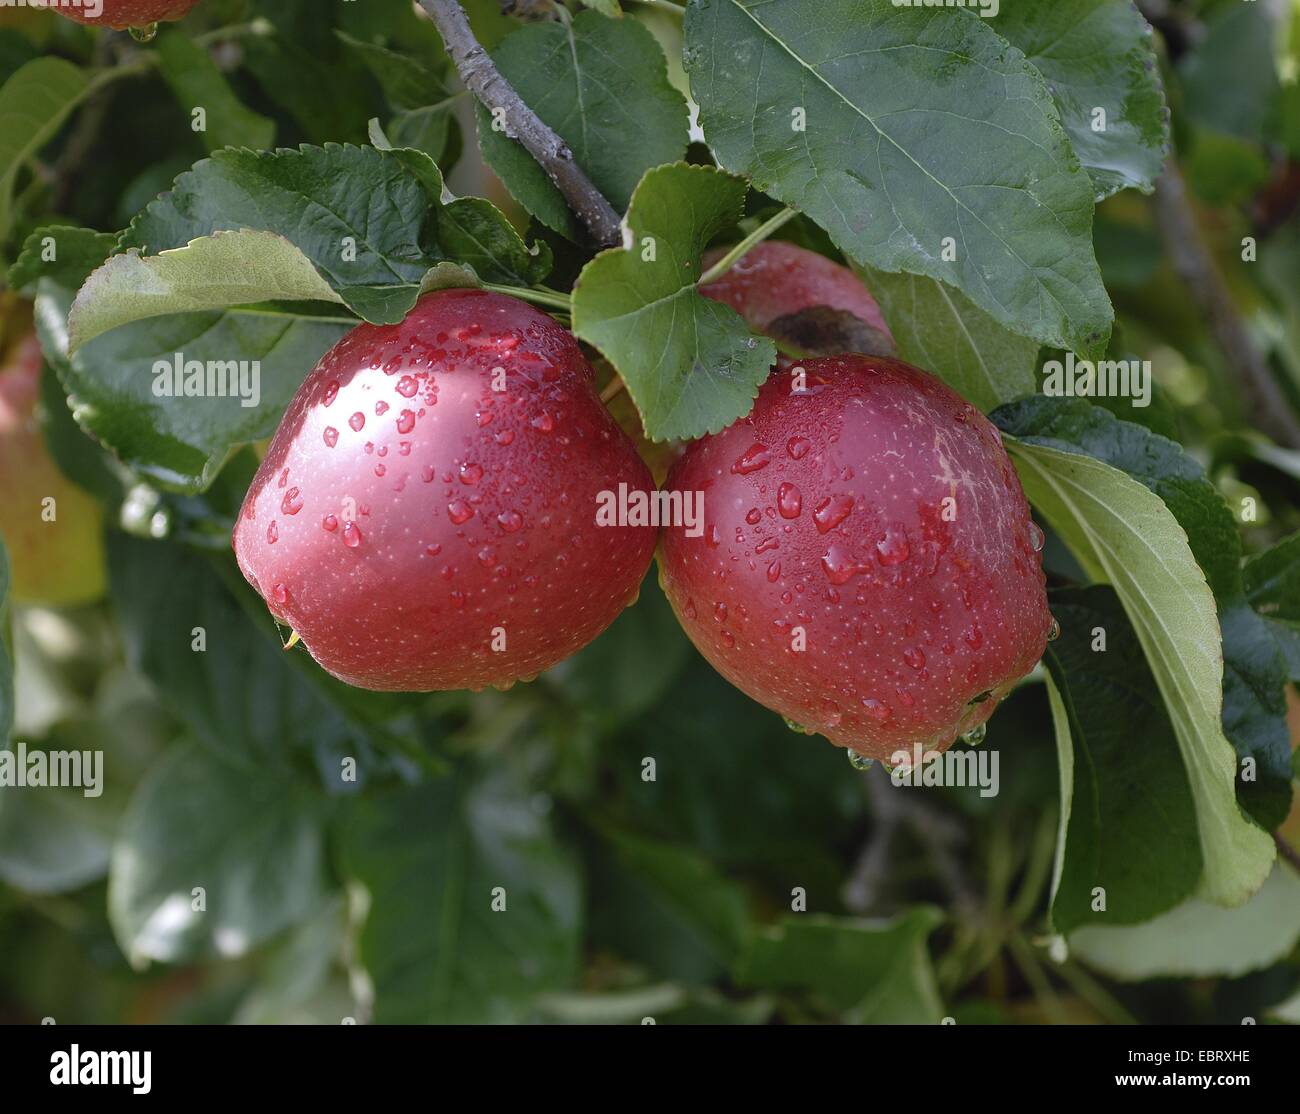 Manzano (Malus domestica 'Saturno', Malus domestica), cultivar Saturno Saturno, manzanas de un árbol Foto de stock